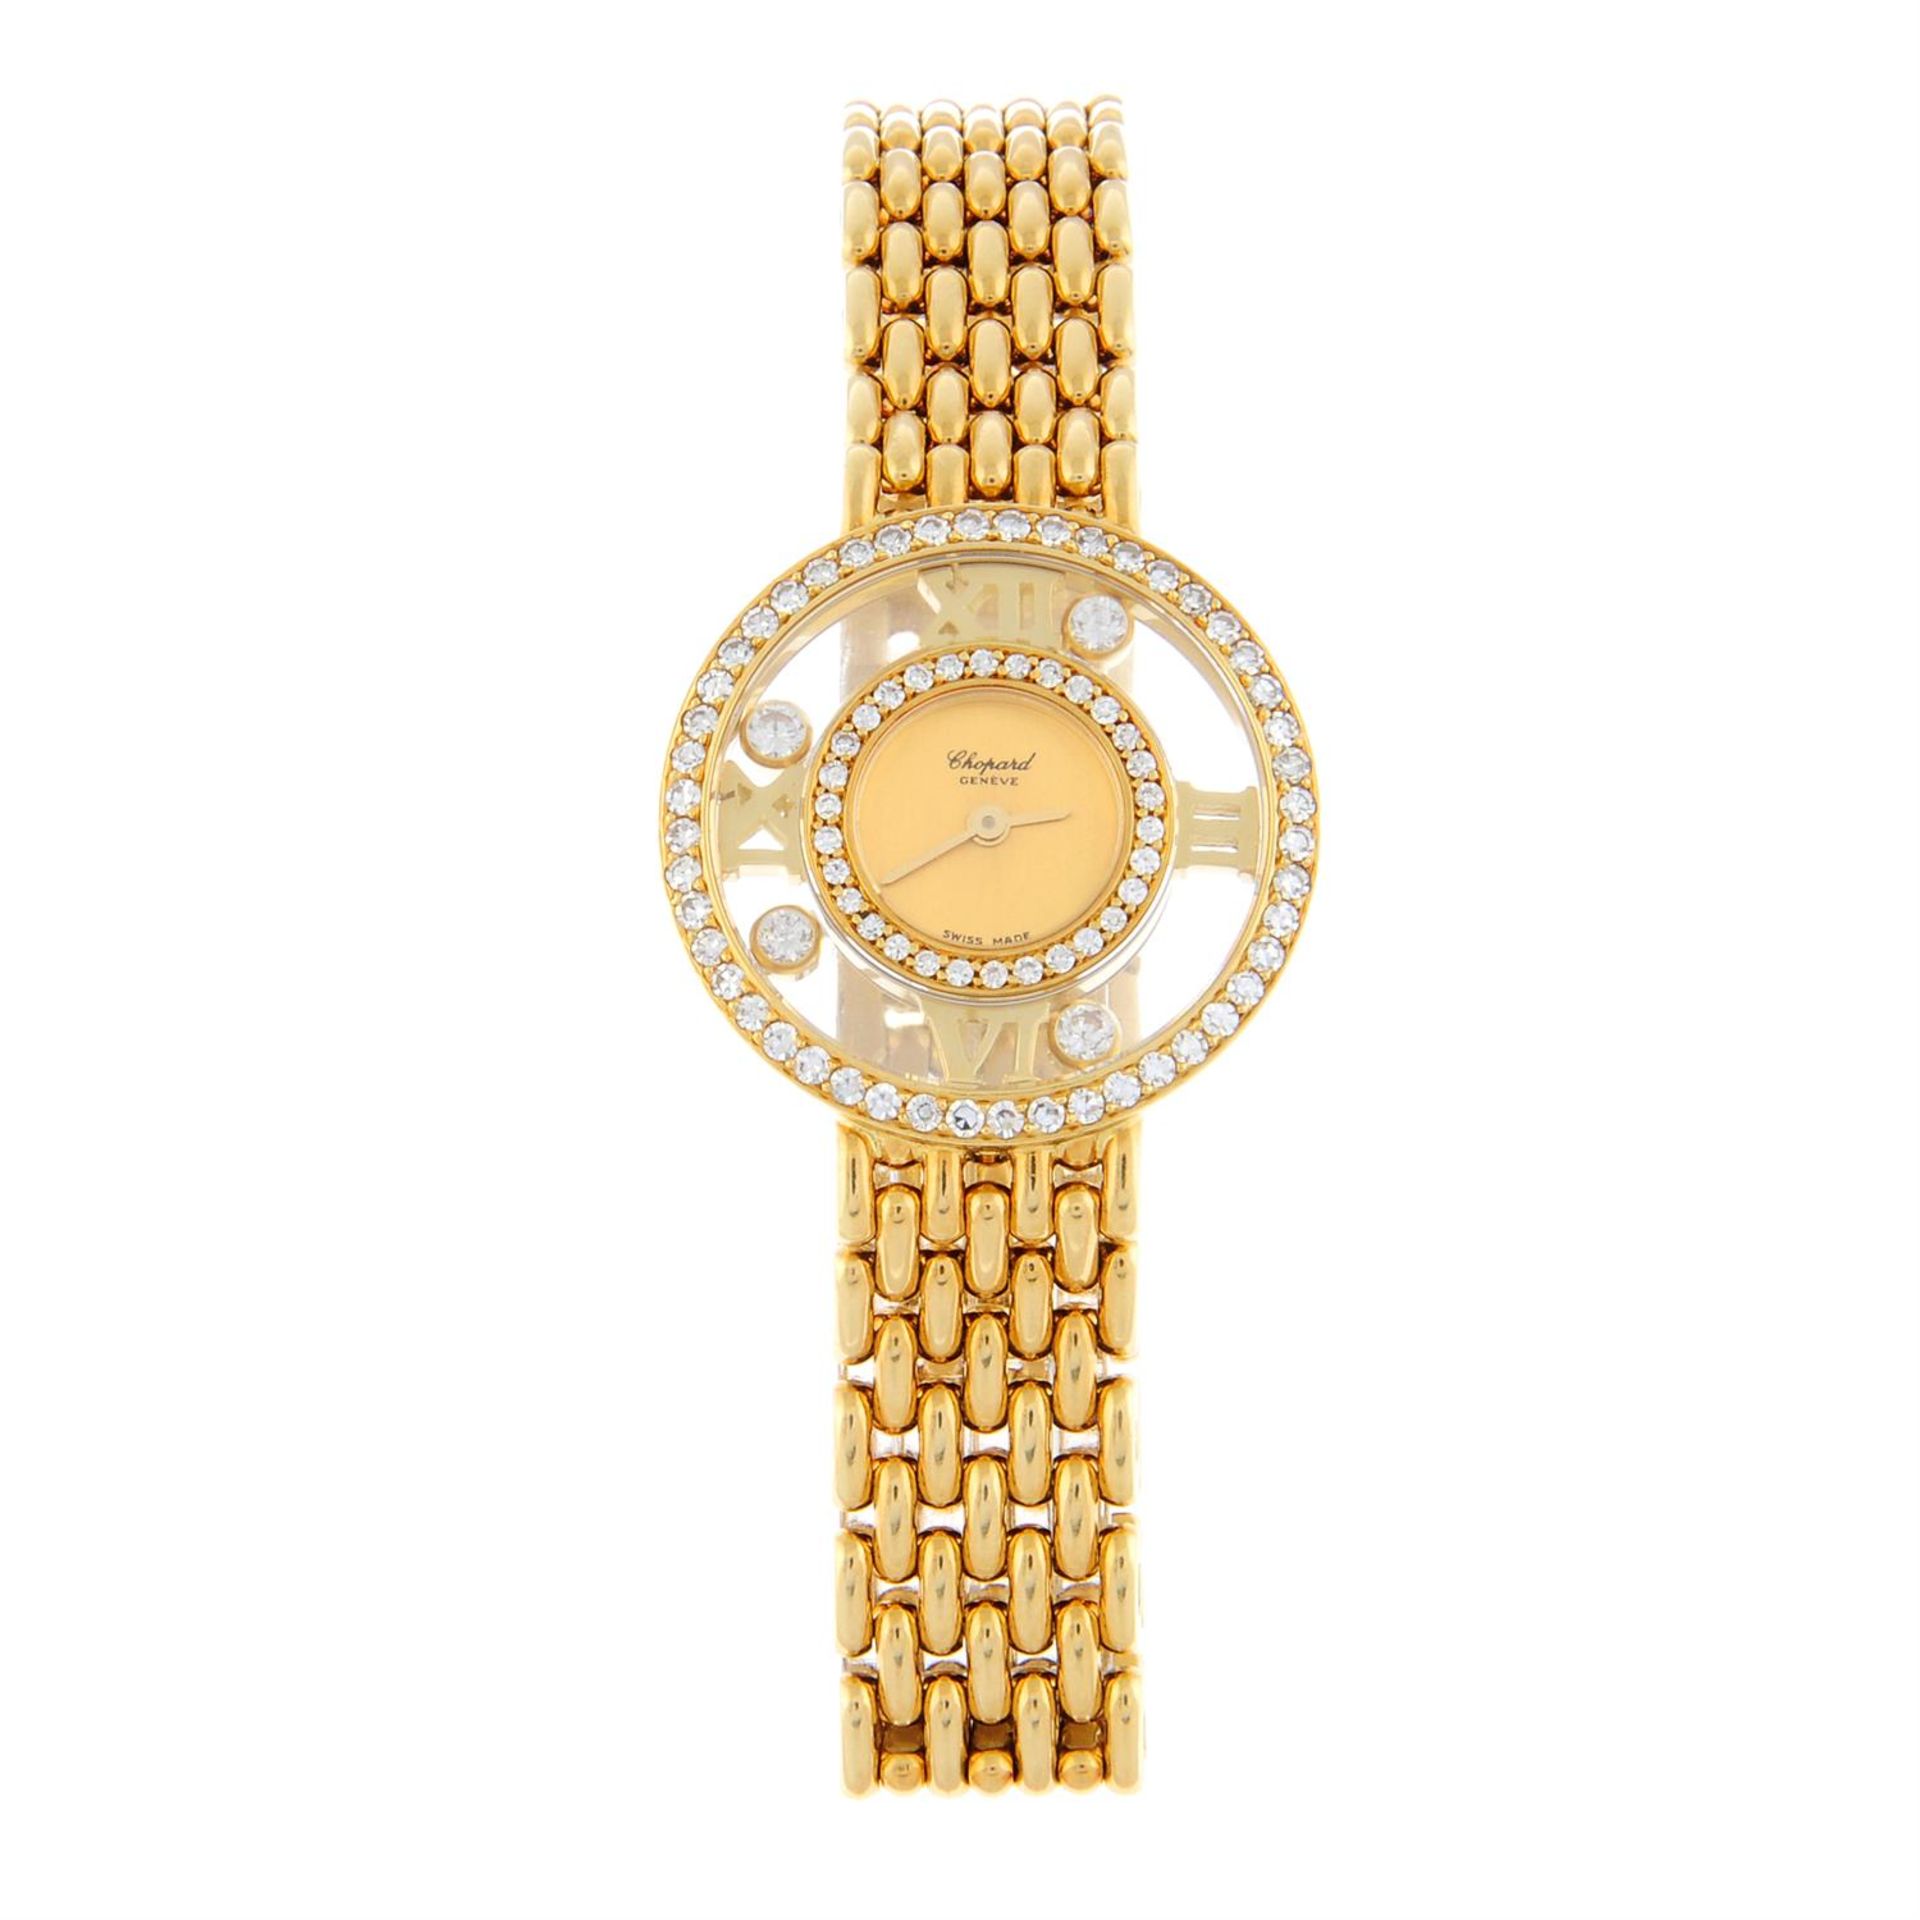 CHOPARD - a factory diamond set 18ct yellow gold Happy Diamonds bracelet watch, 24mm.